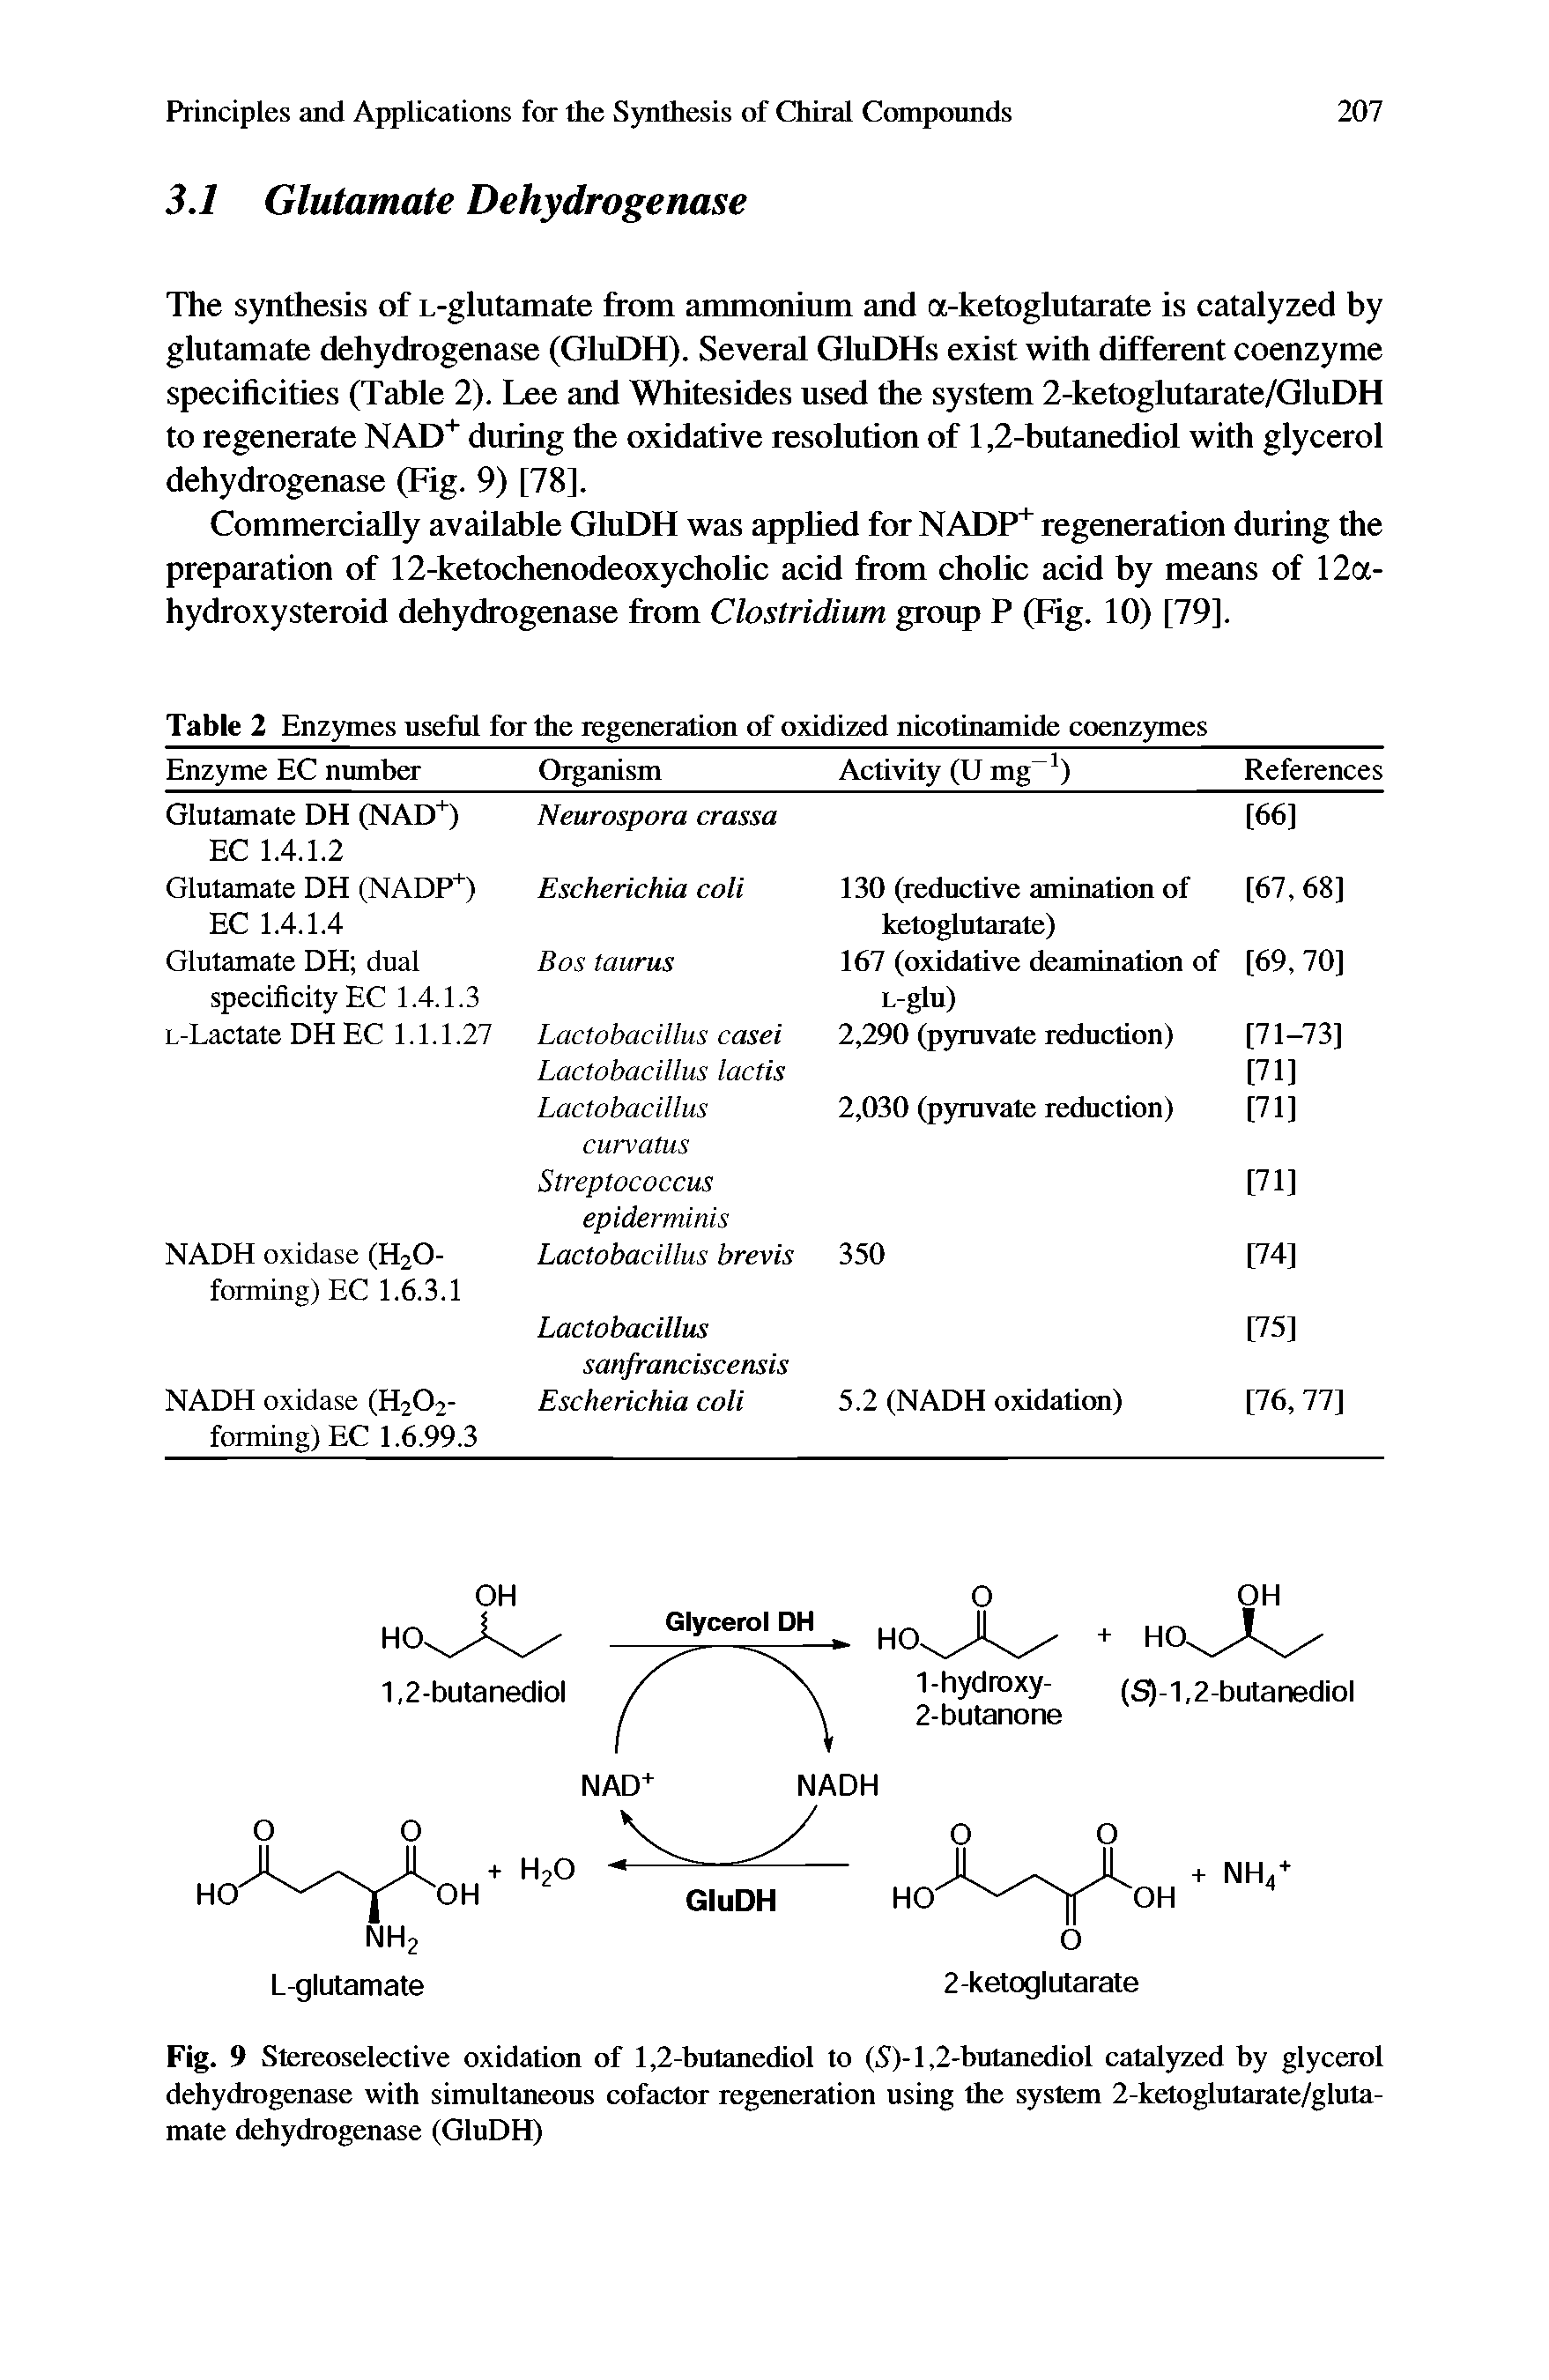 Fig. 9 Stereoselective oxidation of 1,2-butanediol to (S)-1,2-butanediol catalyzed by glycerol dehydrogenase with simultaneous cofactor regeneration using the system 2-ketoglutarate/gluta-mate dehydrogenase (GluDH)...